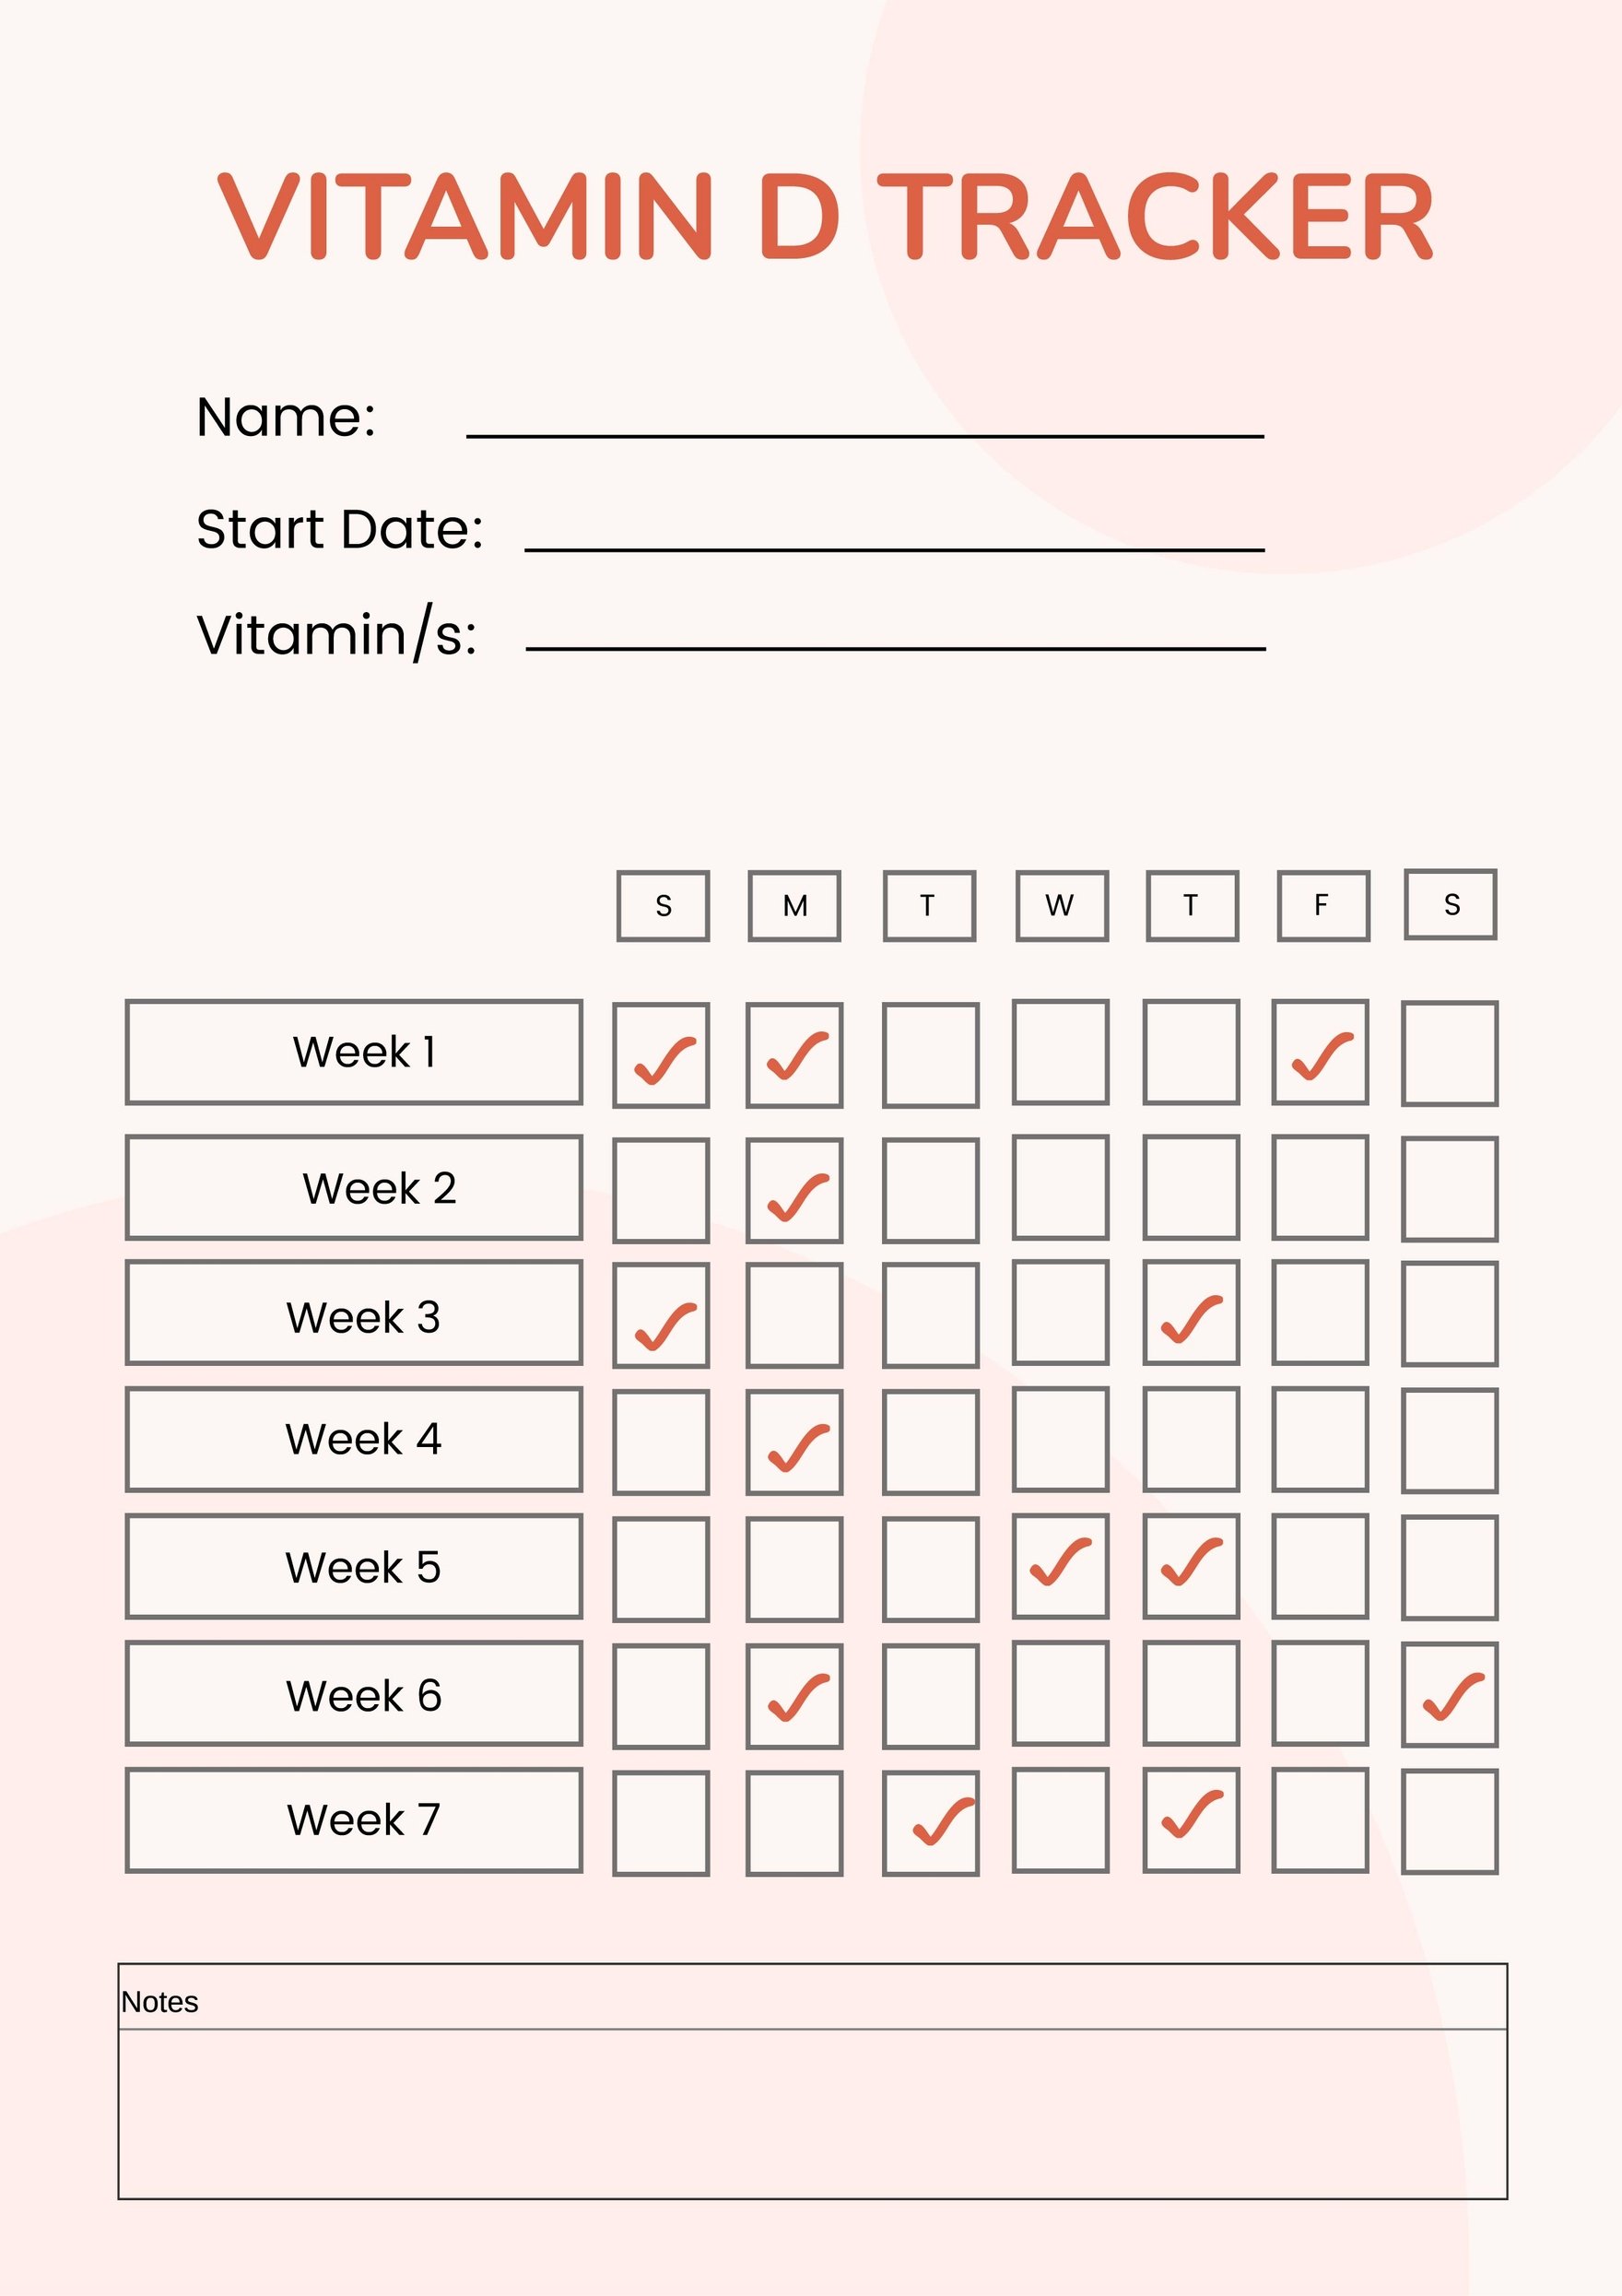 Vitamin D Tracker Chart in PDF, Illustrator